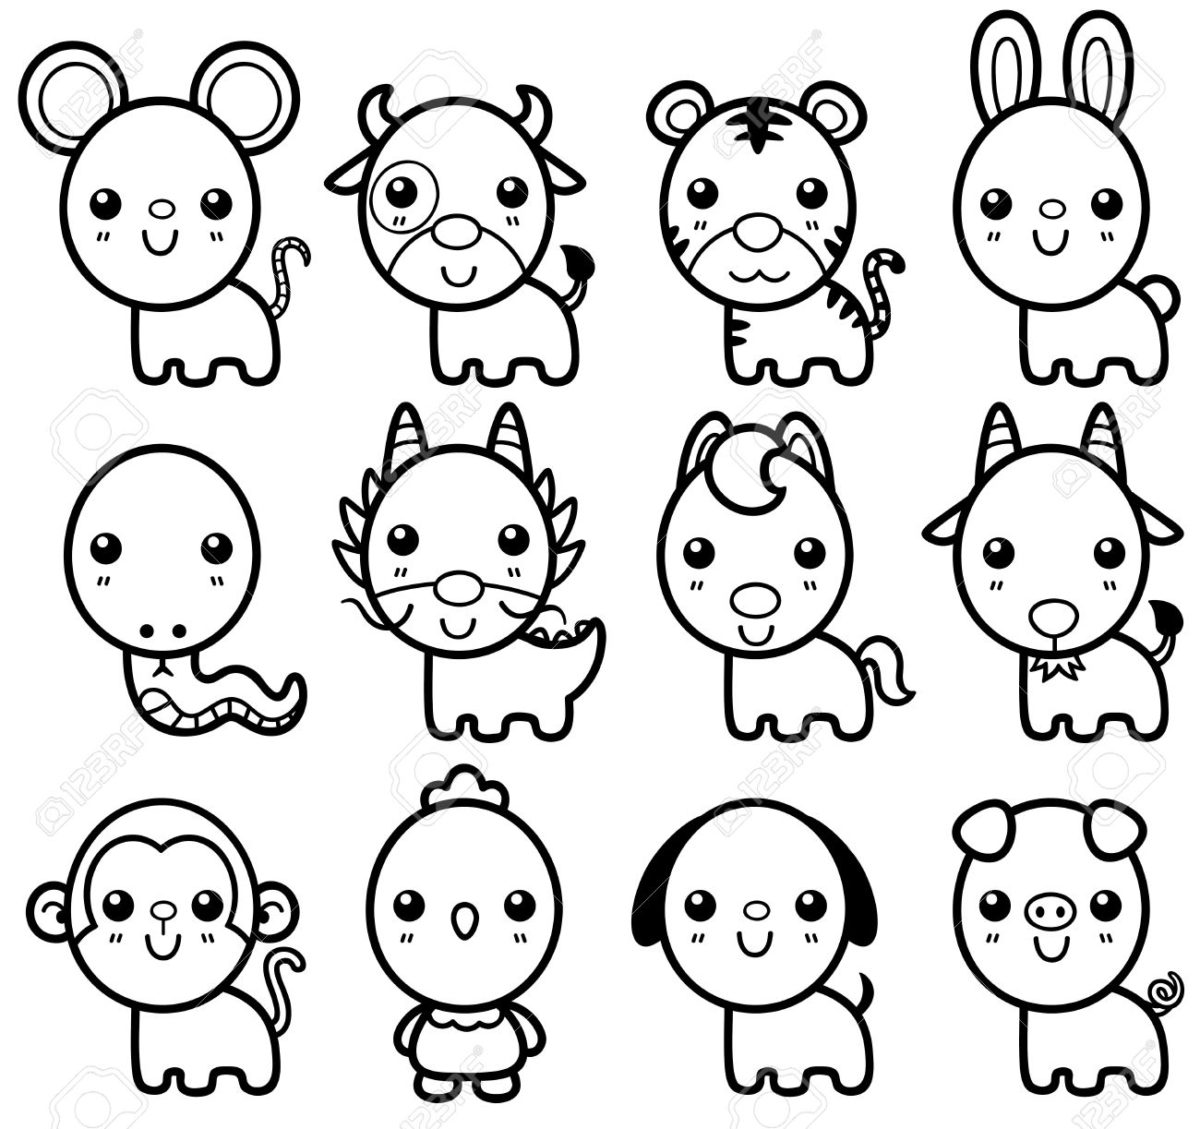 https://www.tuexperto.com/wp-content/uploads/2021/09/33675755-ilustracion-vectorial-de-zodiaco-chino-de-dibujos-animados-de-animales-libro-para-colorear-1200x1129.jpg